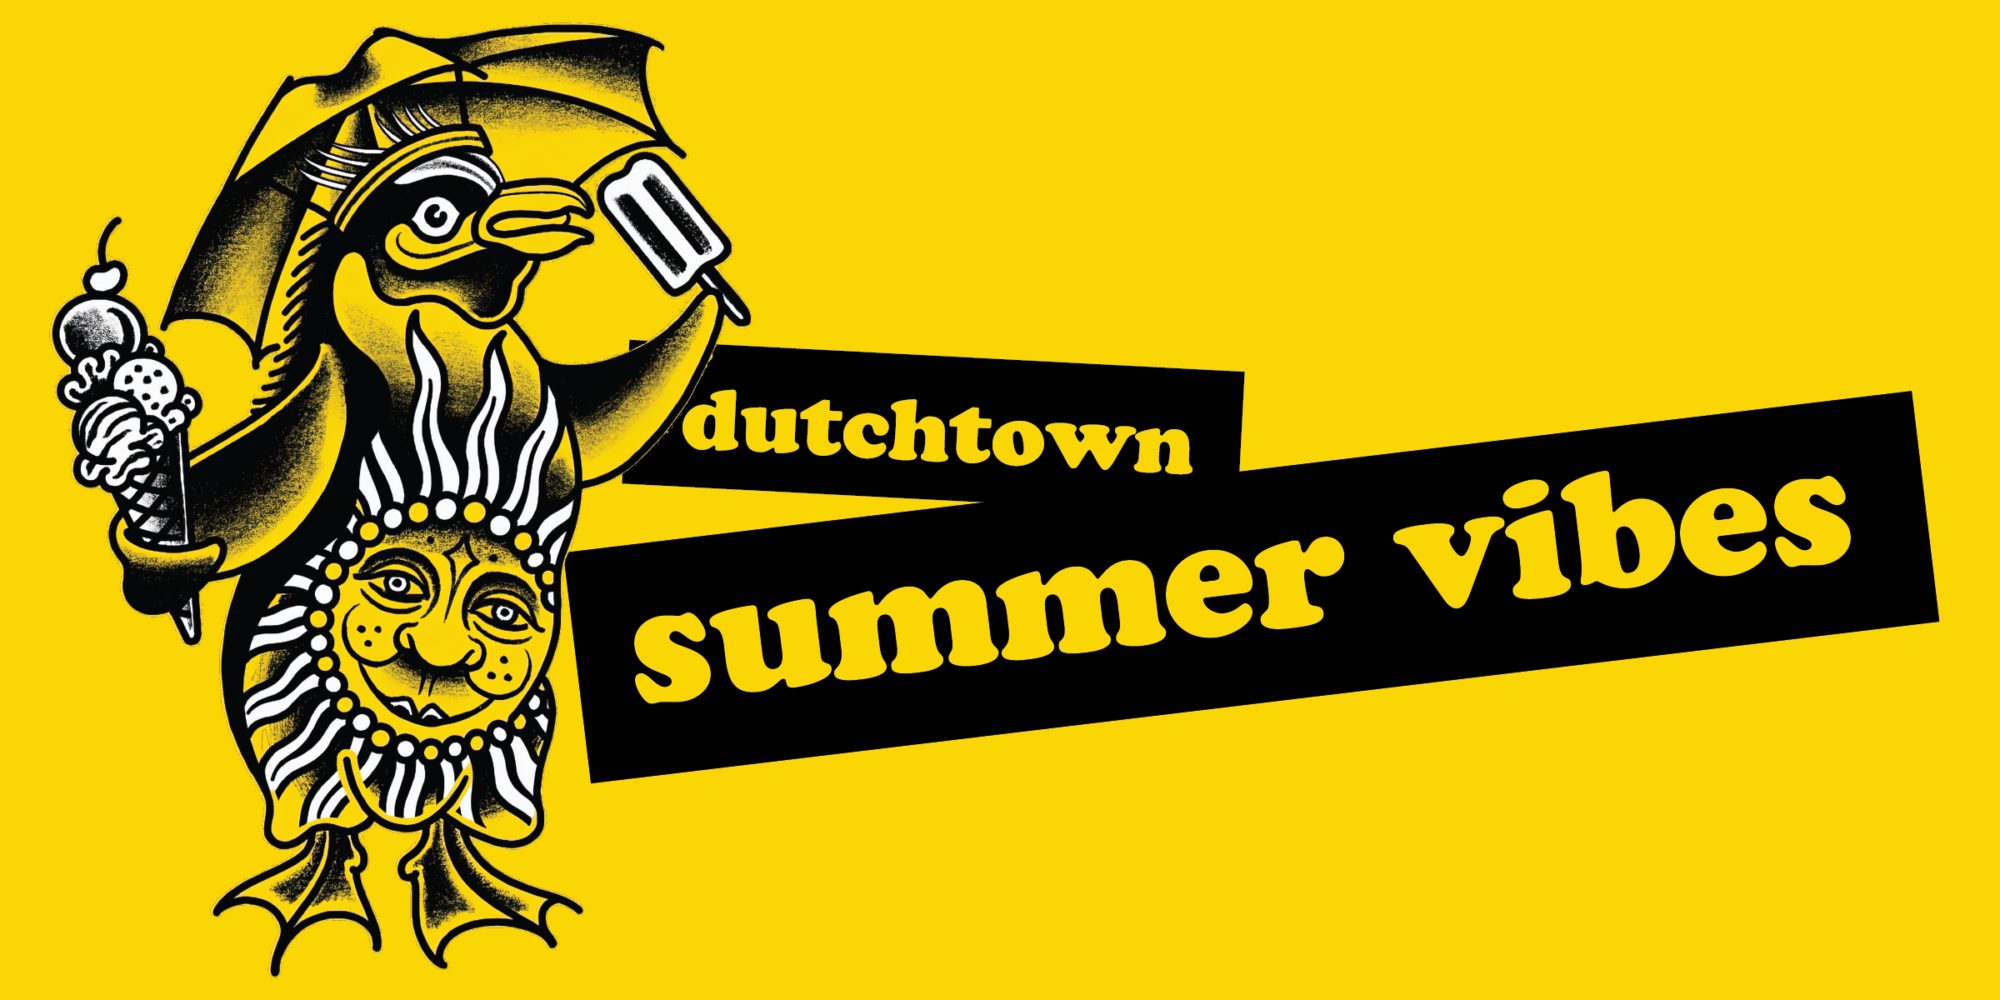 Vibes Summer Dutchtown